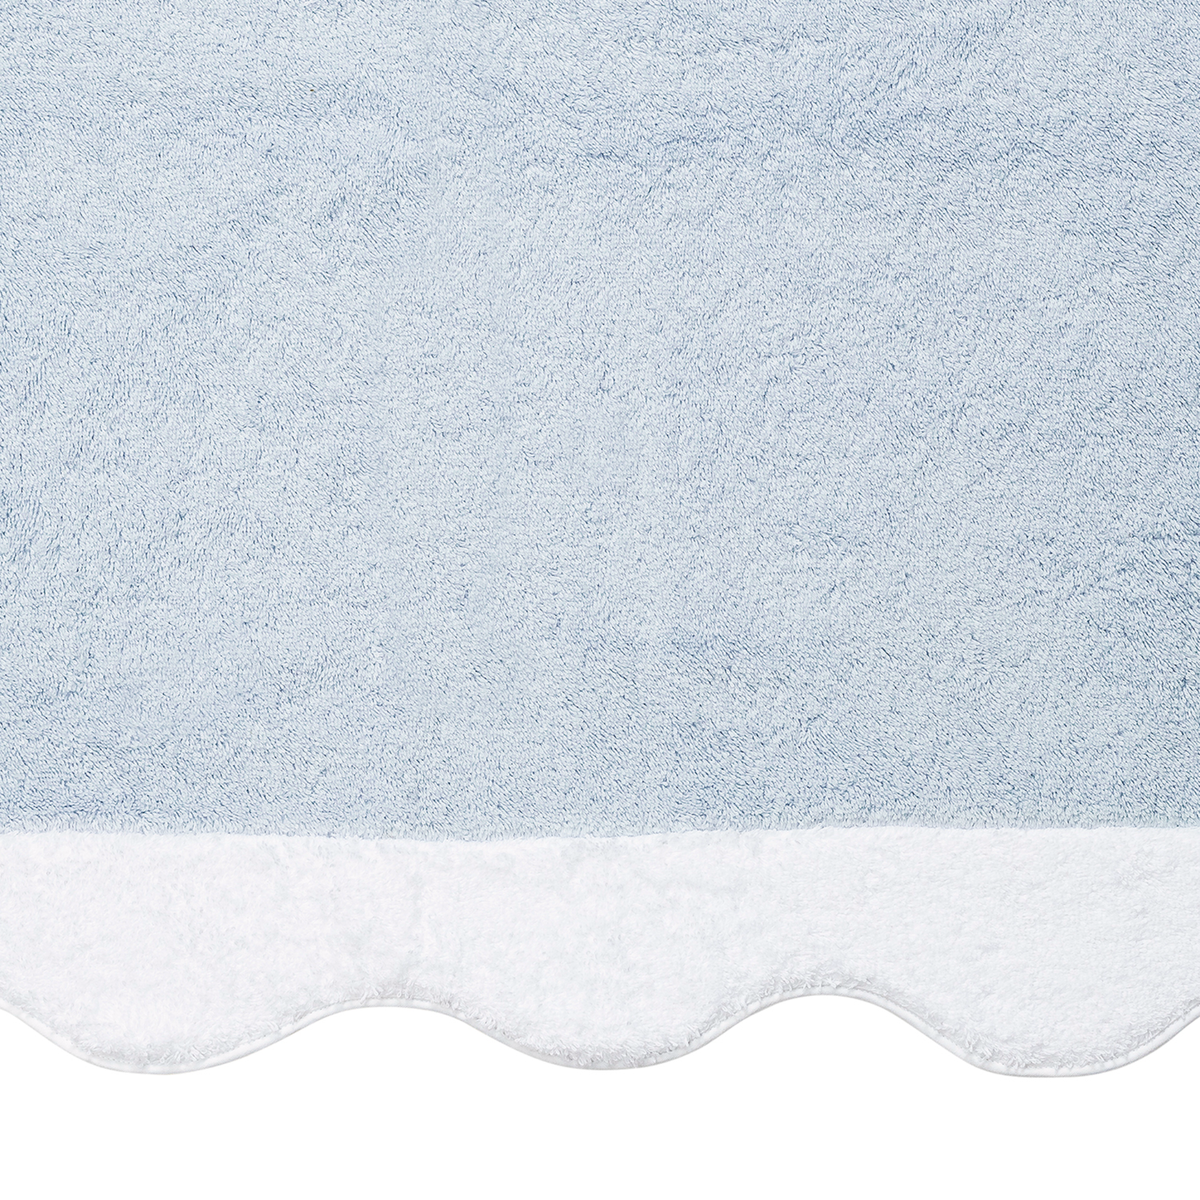 Fabric Closeup of Matouk Neptune Beach Towels in Light Blue/White Color